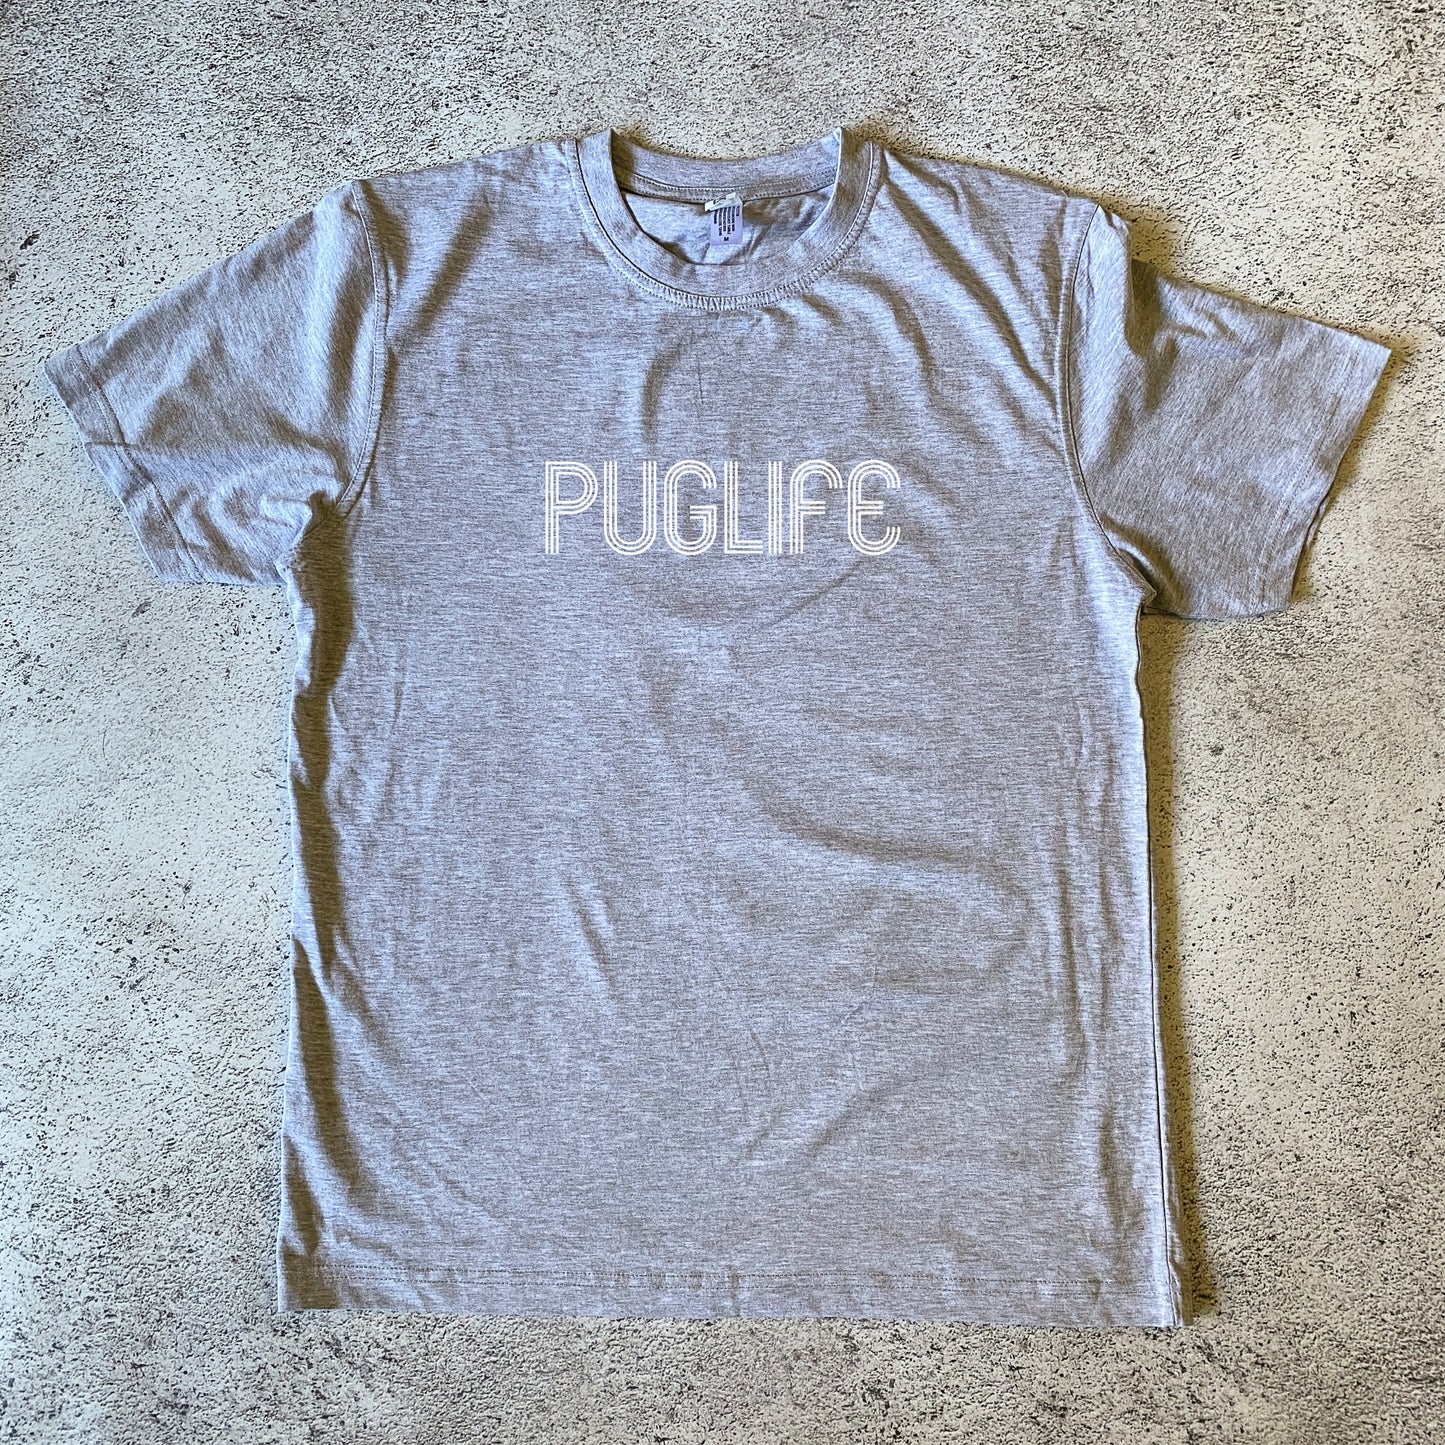 Retro Pug Life Unisex T-Shirt